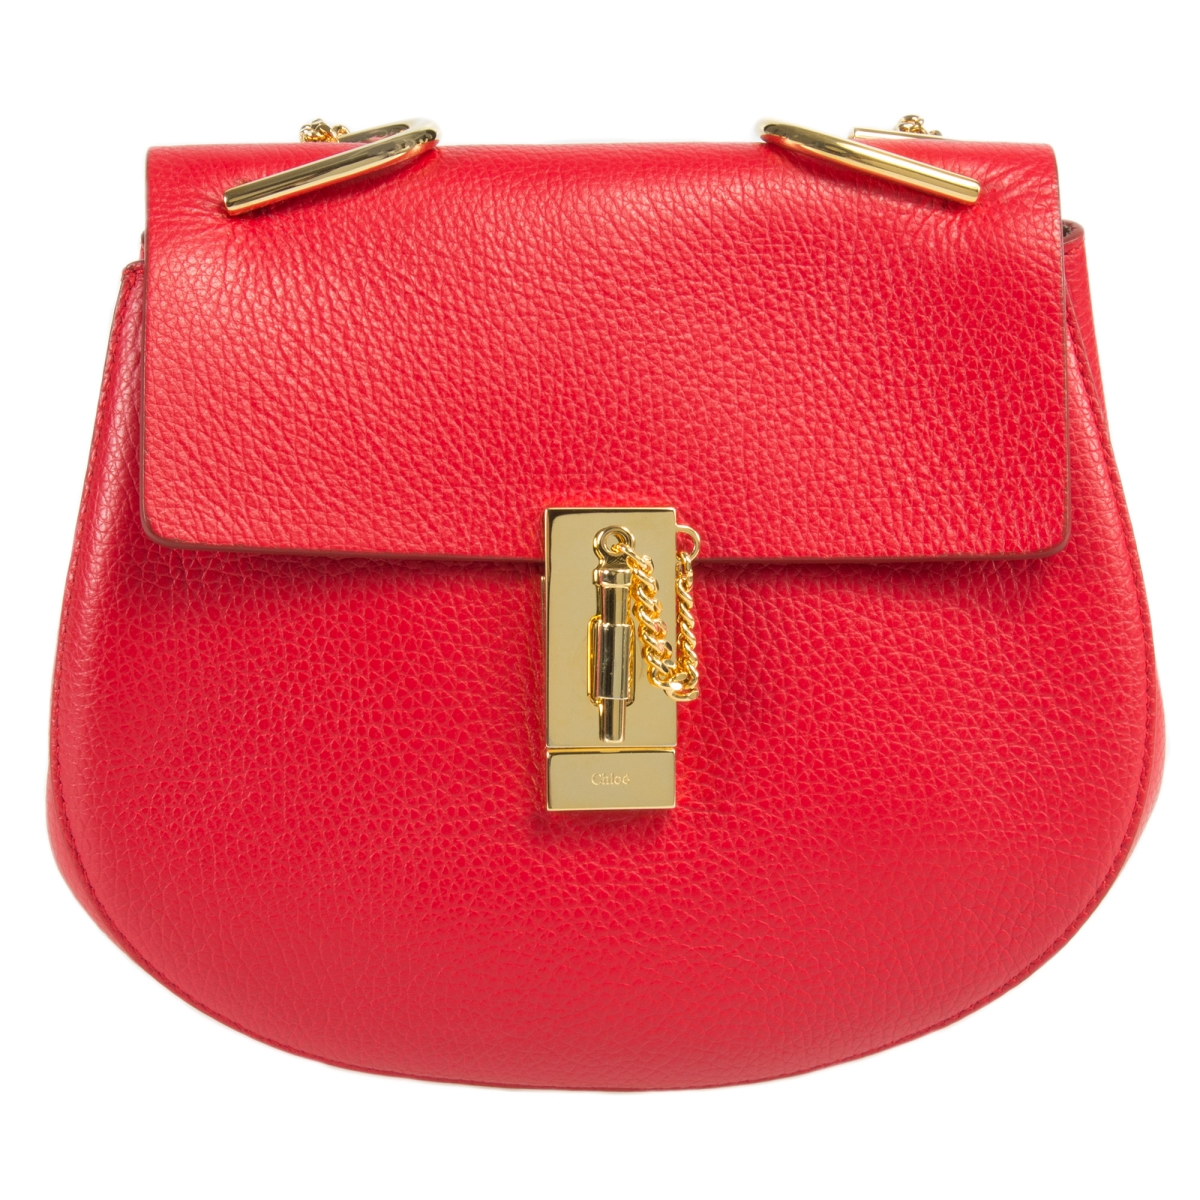 Chl-hbag-drw-red-m Medium Drew Shoulder Bag, Plaid Red With Gold Hardware